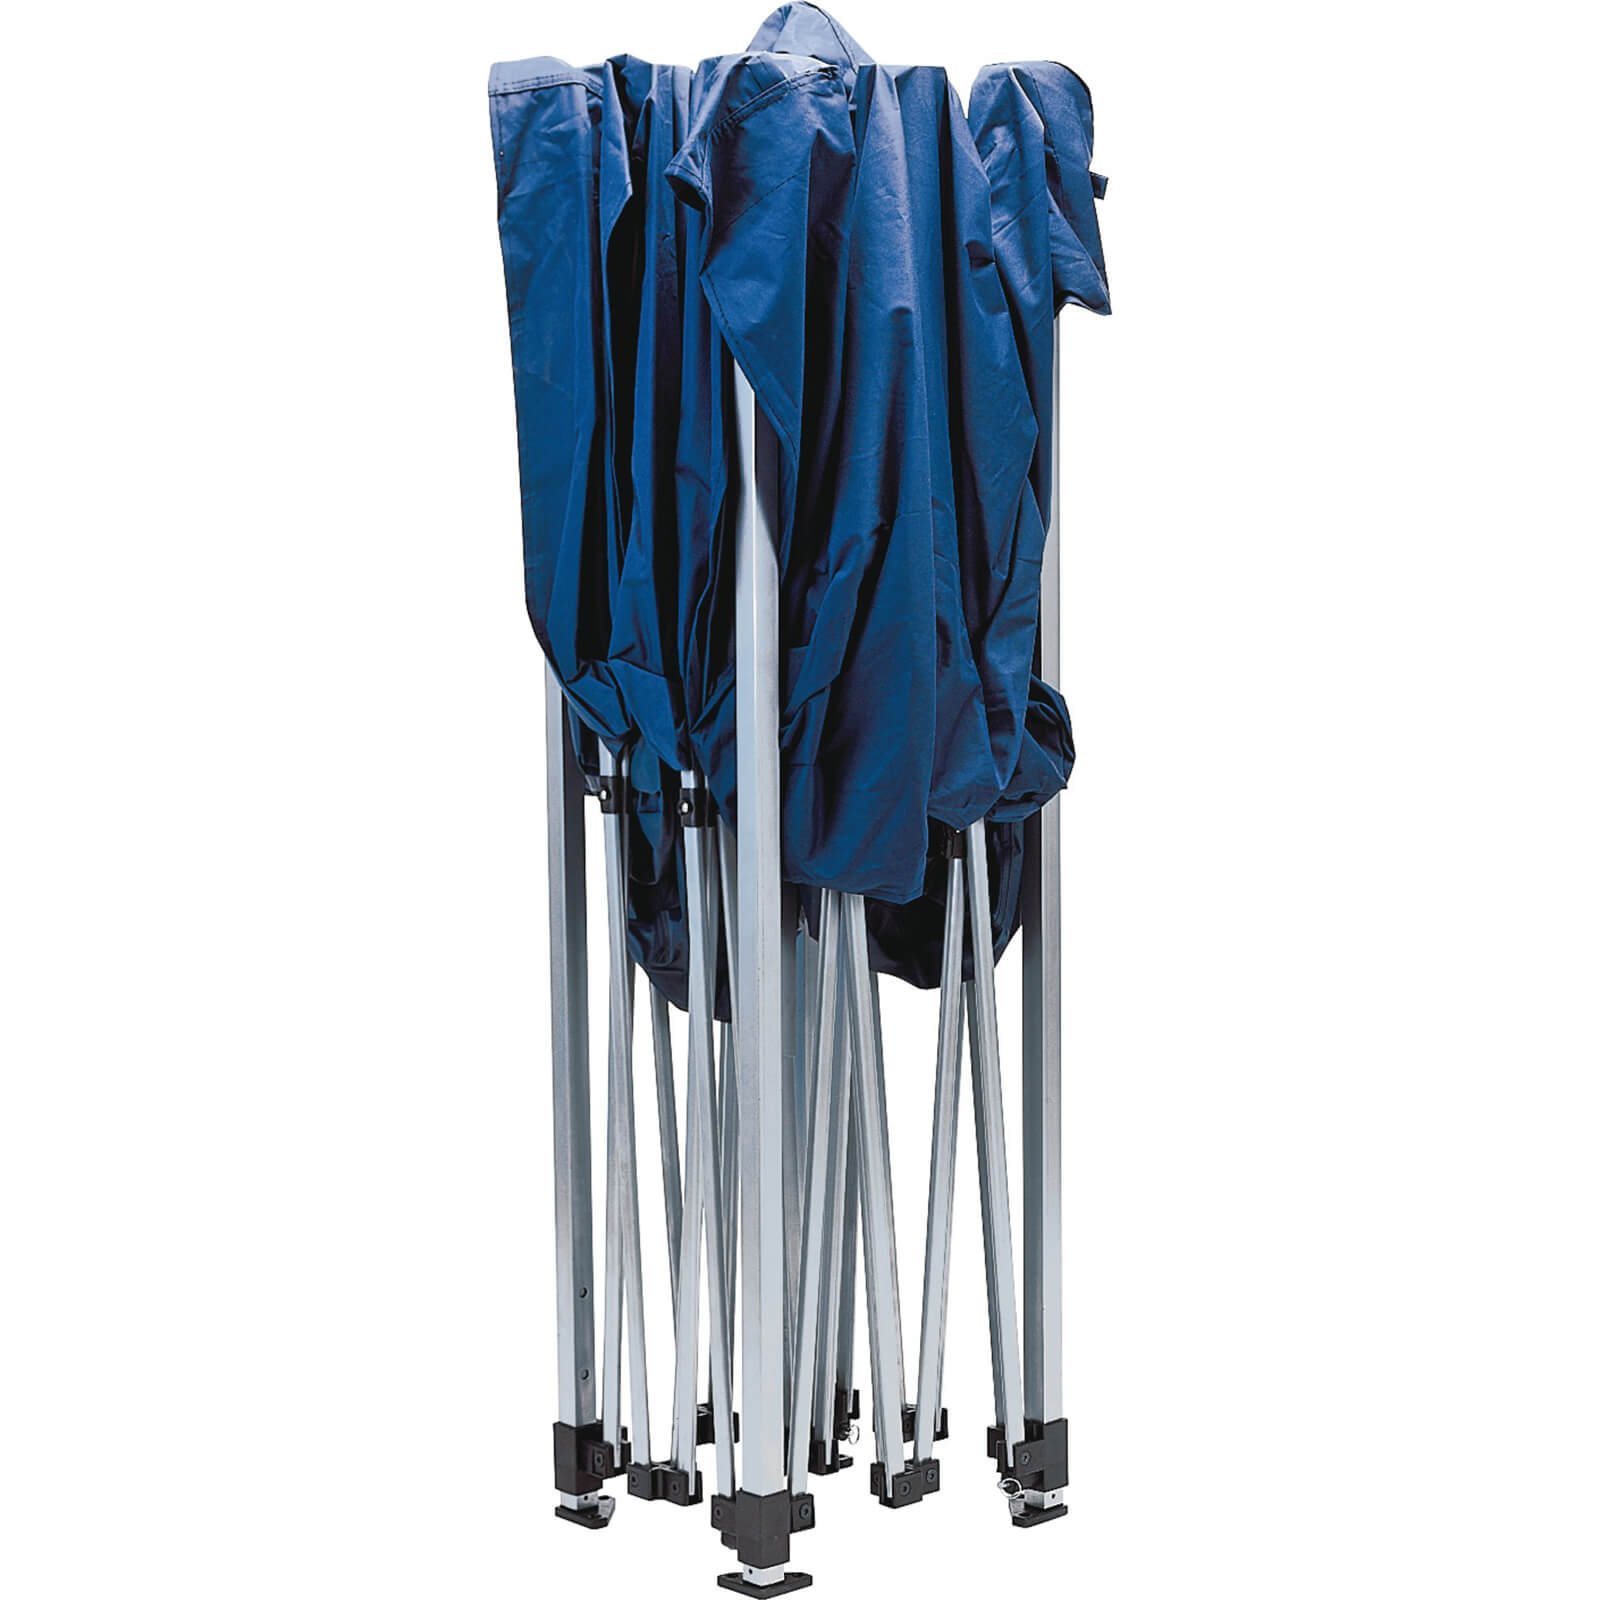 Image of Draper Folding Gazebo Tent Blue 3m x 3m